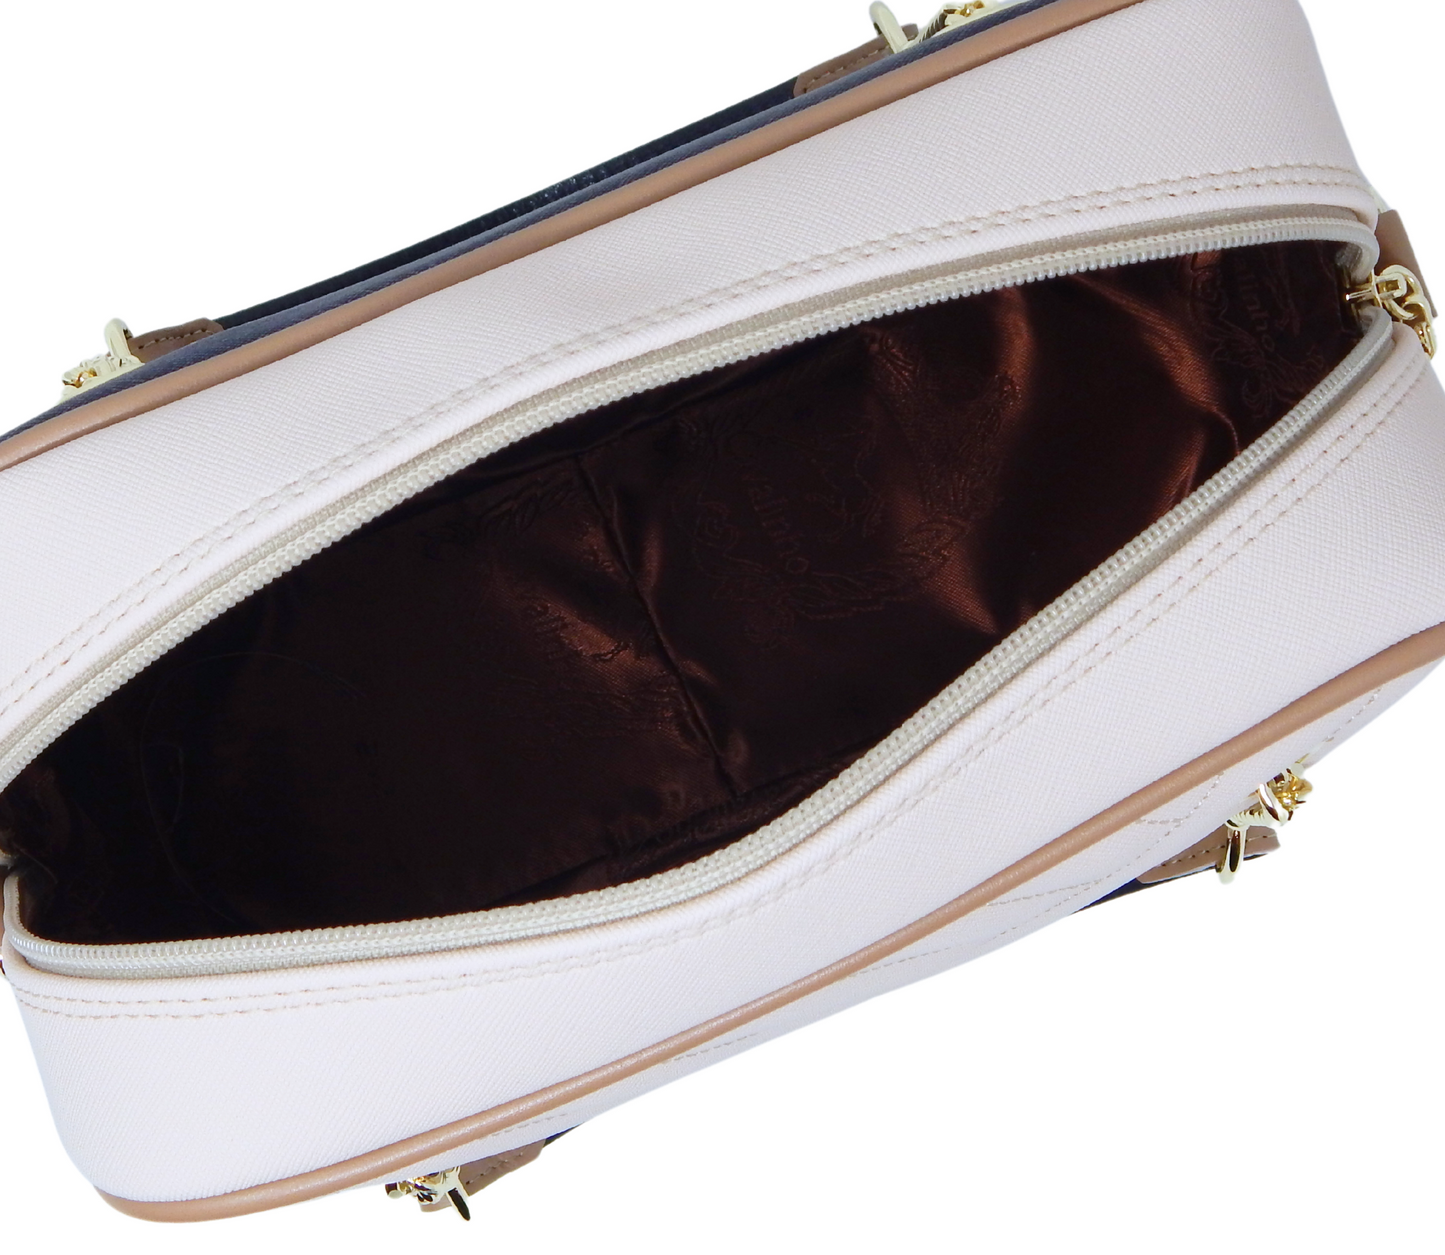 Cavalinho Charming Handbag - Navy / Tan / Beige - 18470512.22_internal1